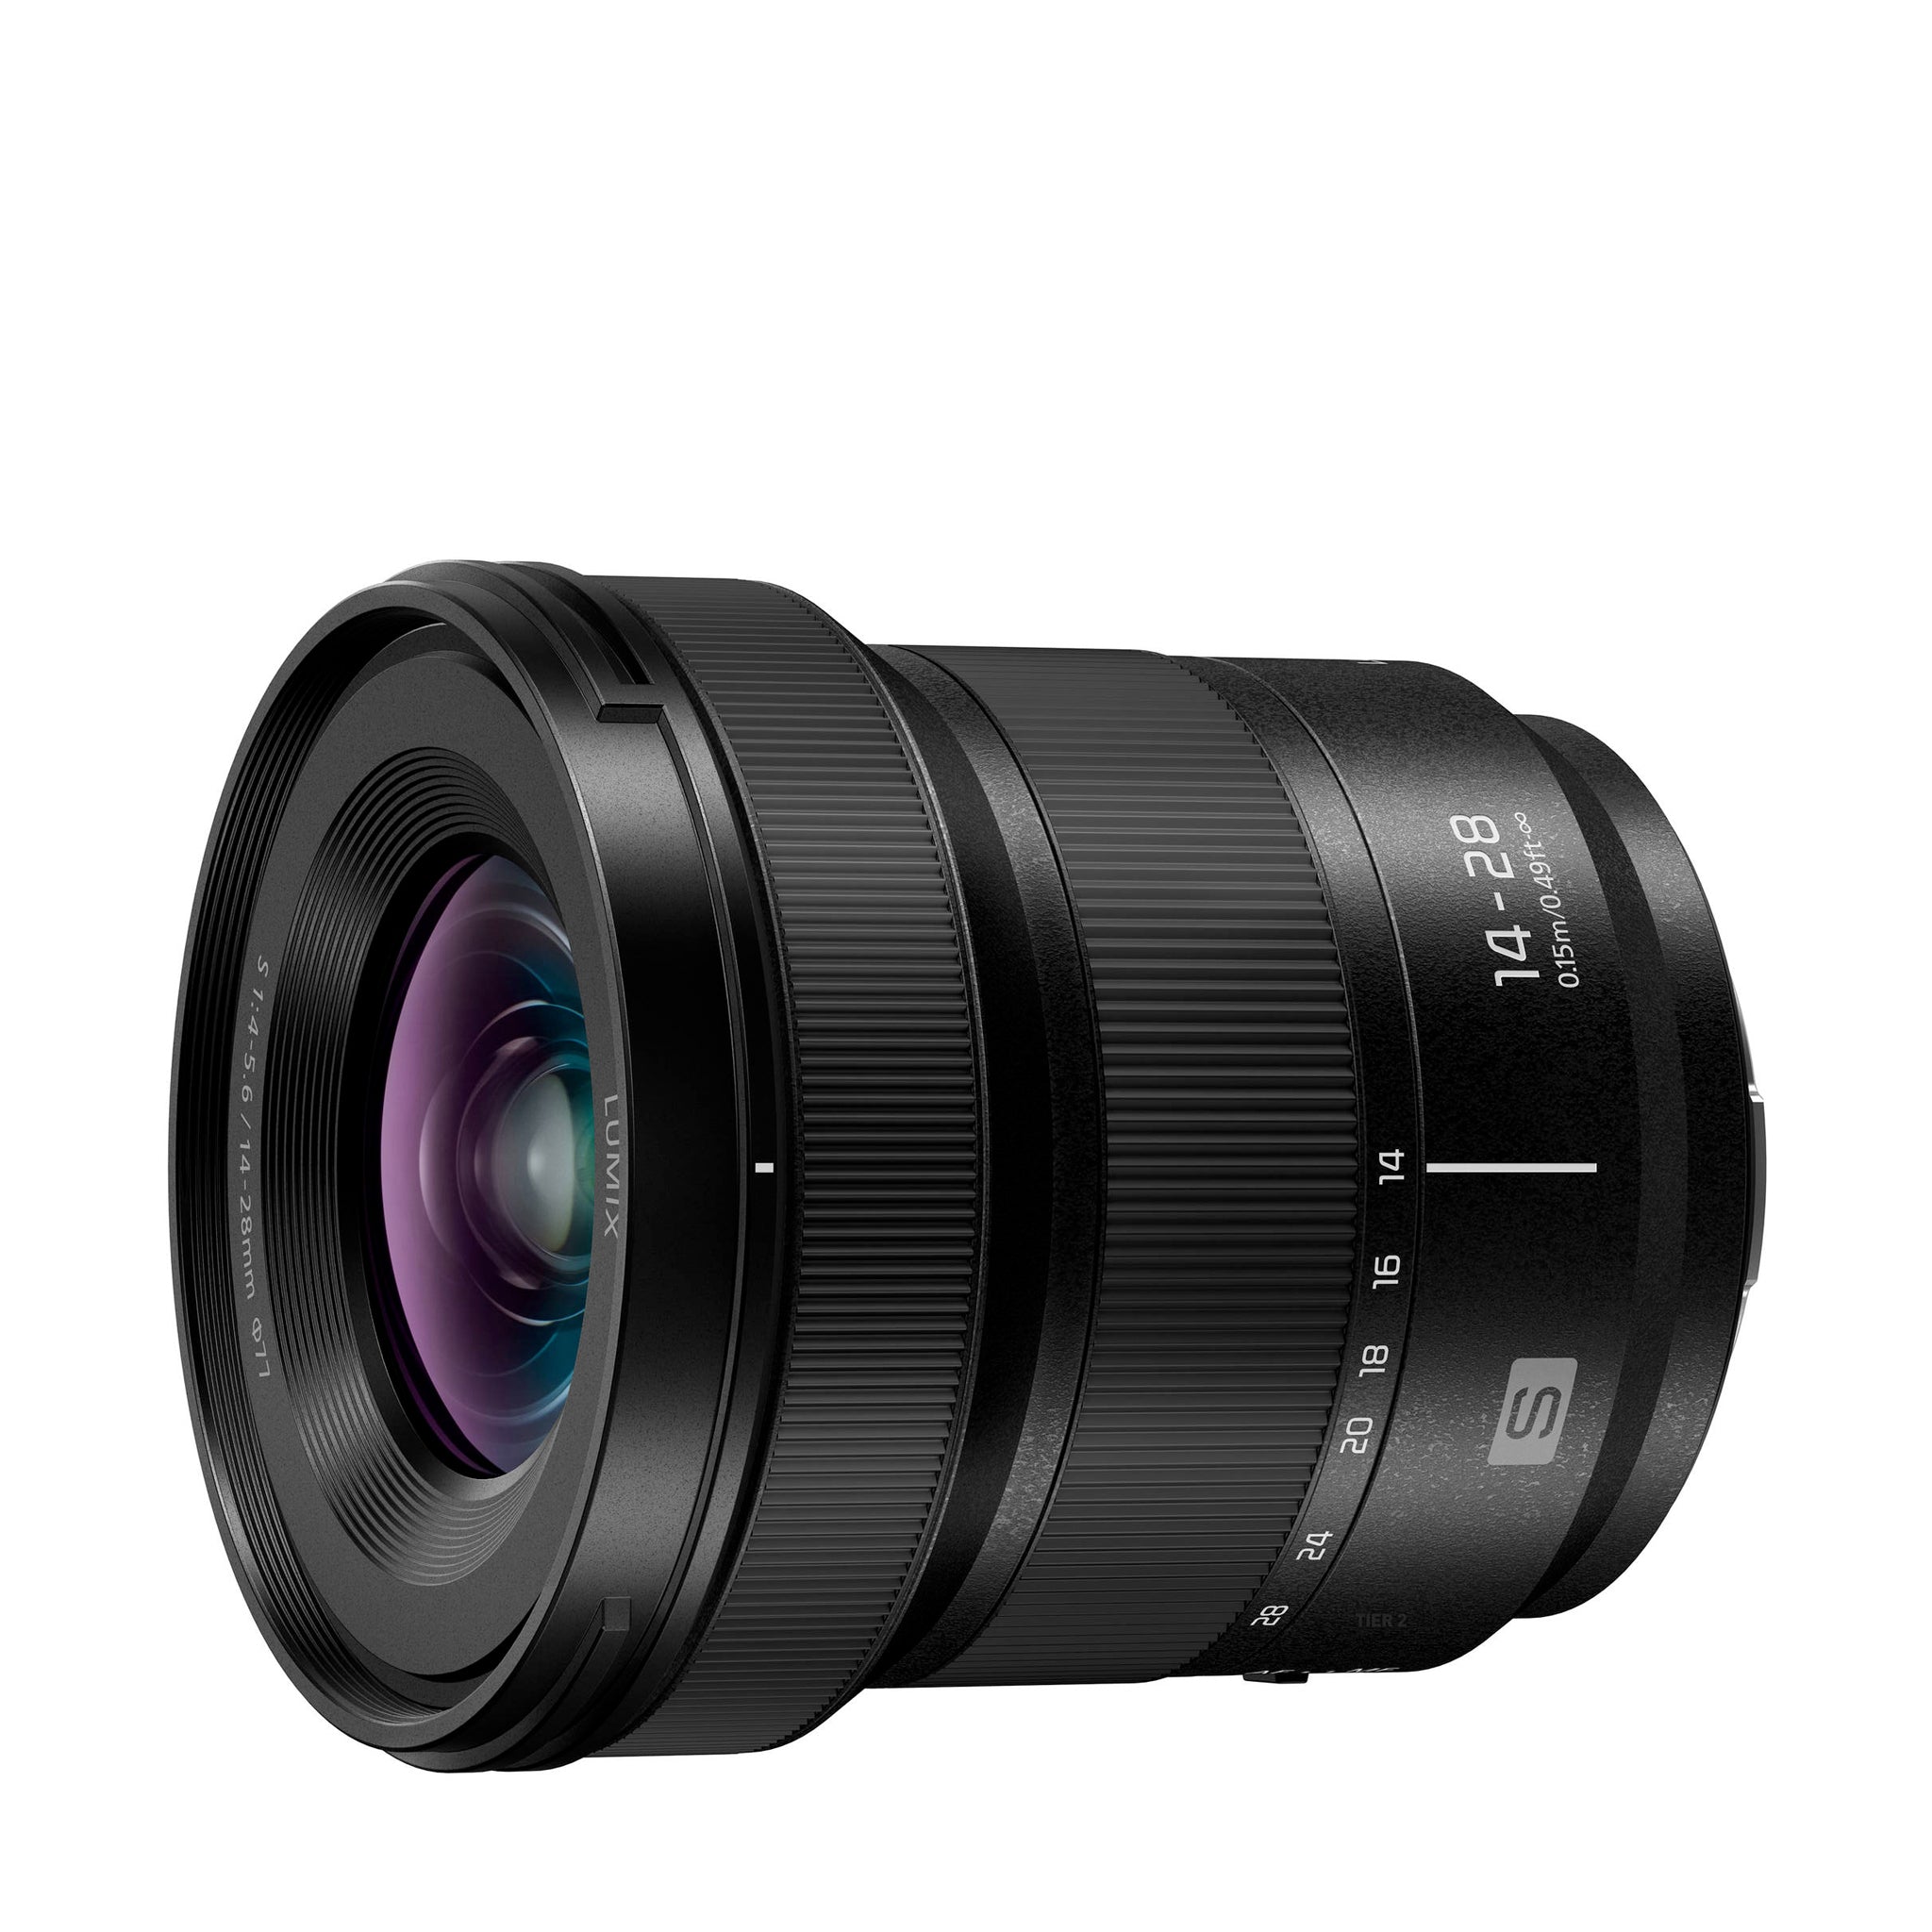 Panasonic LUMIX G Series F007014 7-14mm F4.0 ASPH Lens